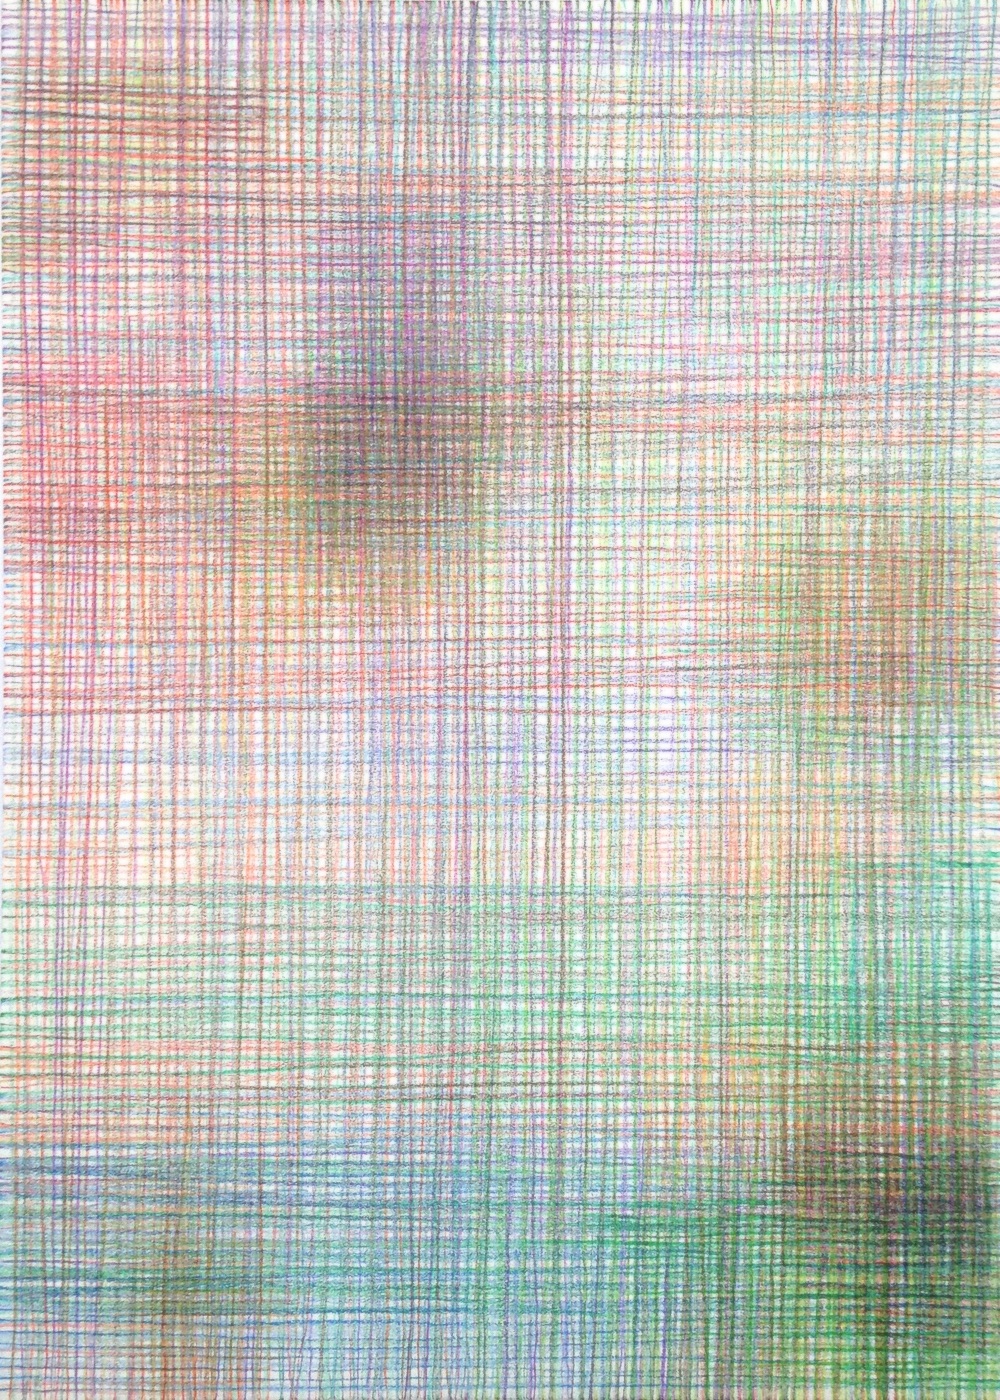 simone hamann_strings_textile1_12,7 x 17,7 colorpencil on card_2015